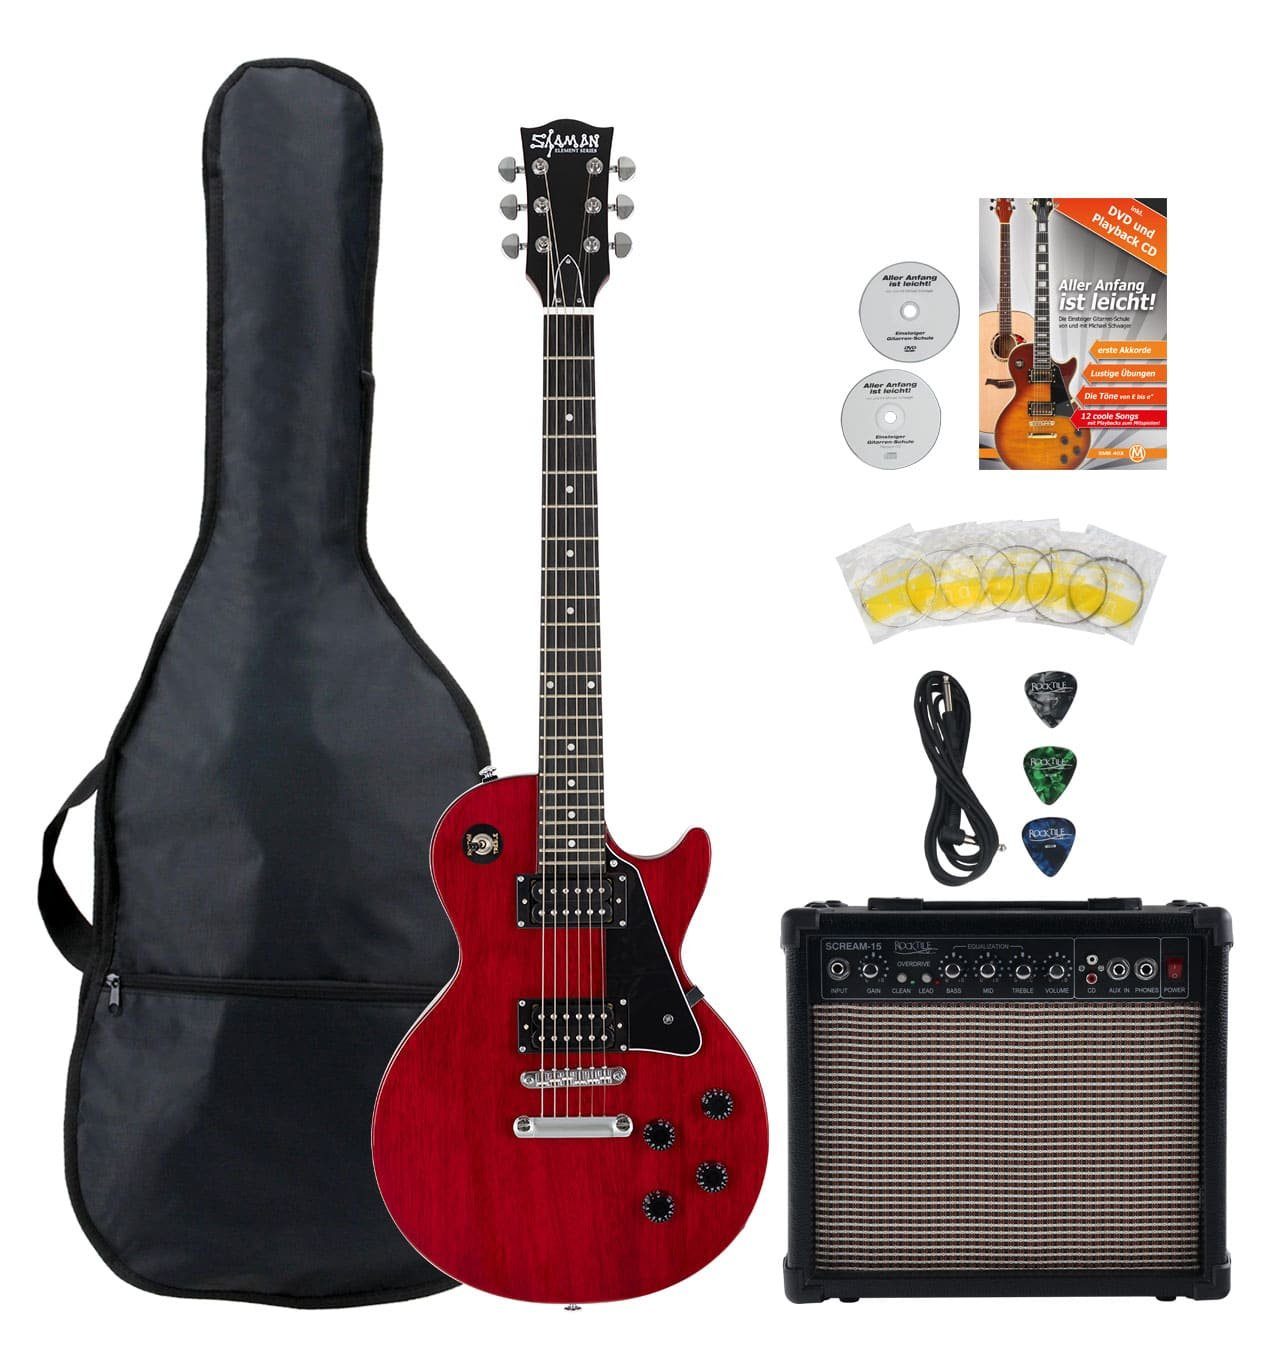 Shaman E-Gitarre SCX-100 - Single Cut-Bauweise - Mahagoni Hals - Macassar-Griffbrett, inkl. 15W Gitarren Amp & 5 teiligem Zubehörset